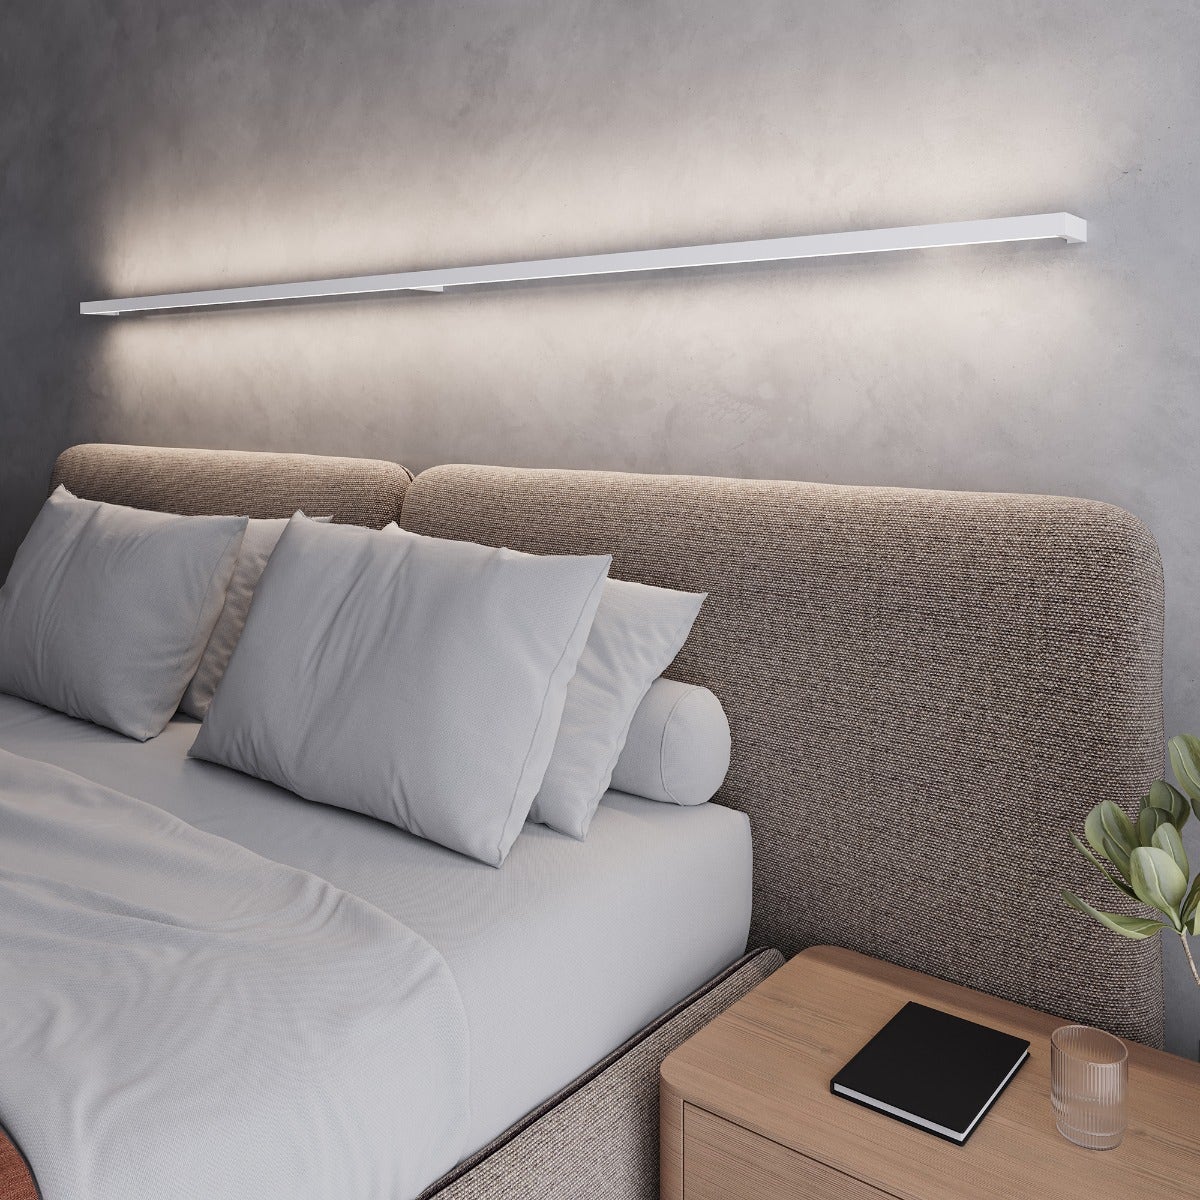 Sonneman Thin-Line™ 6' One-Sided LED Wall Bar